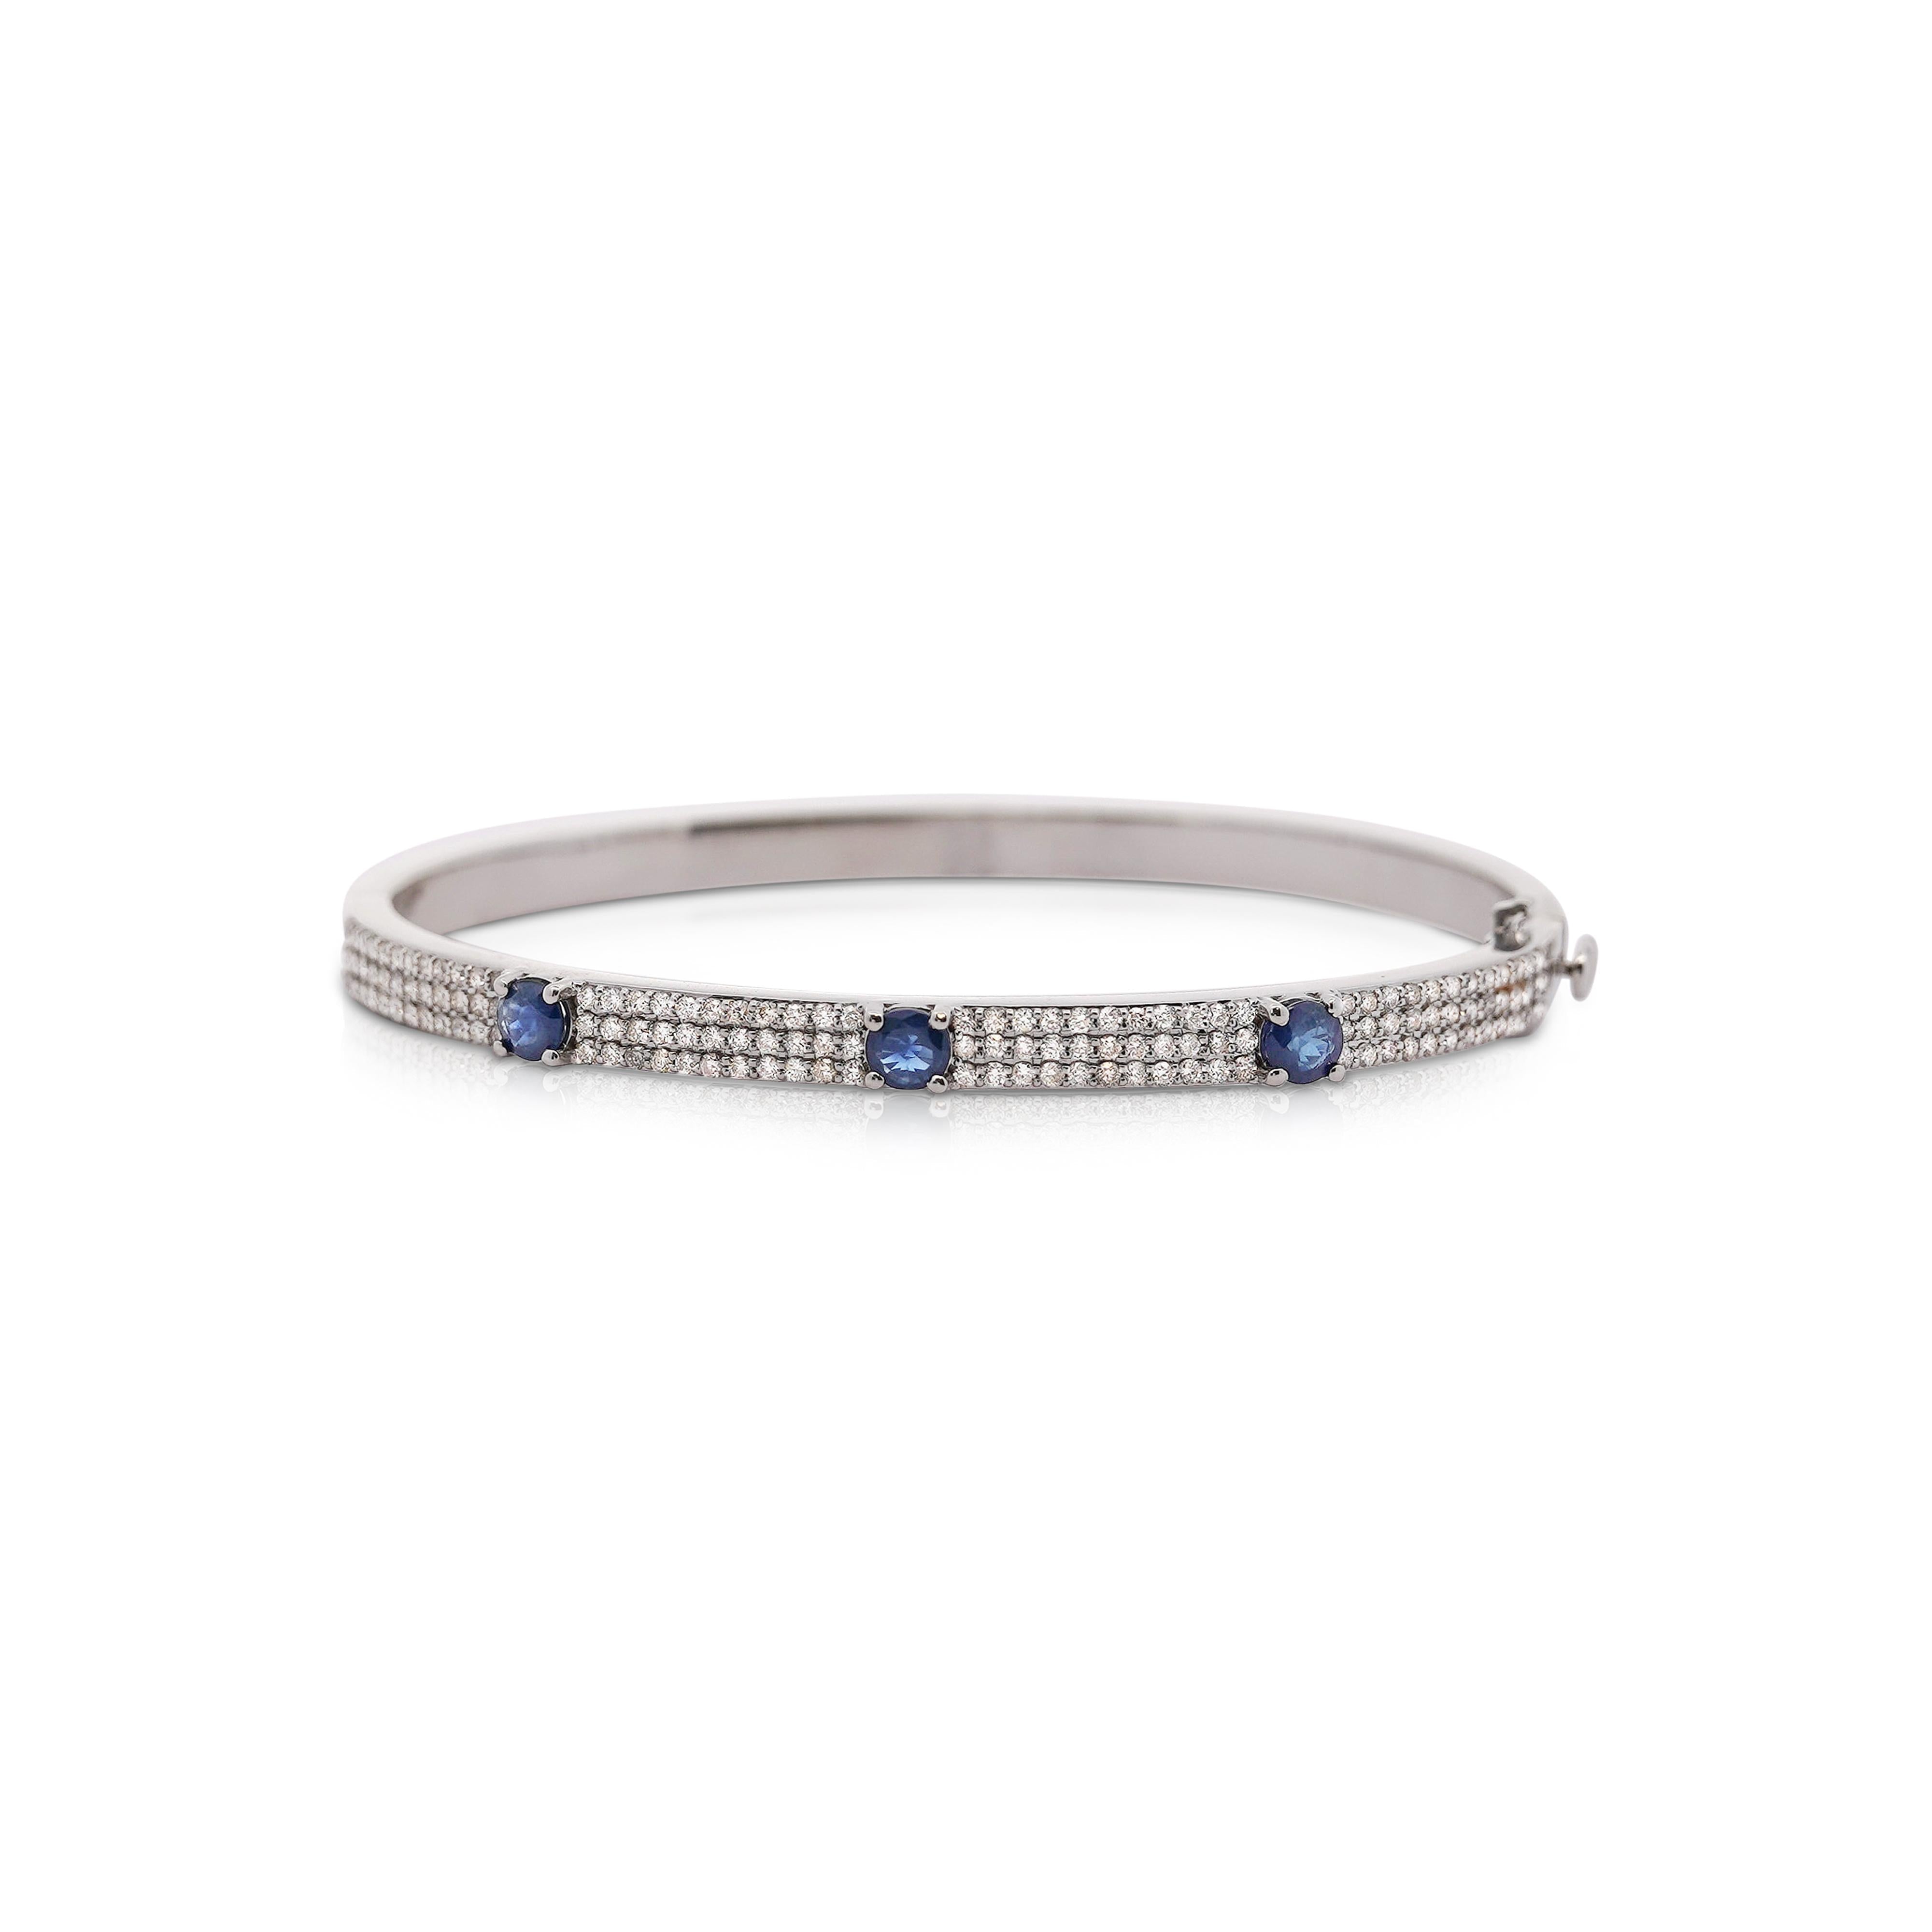 14K White Gold Diamond and Blue Sapphire Pave Bangle Bracelet